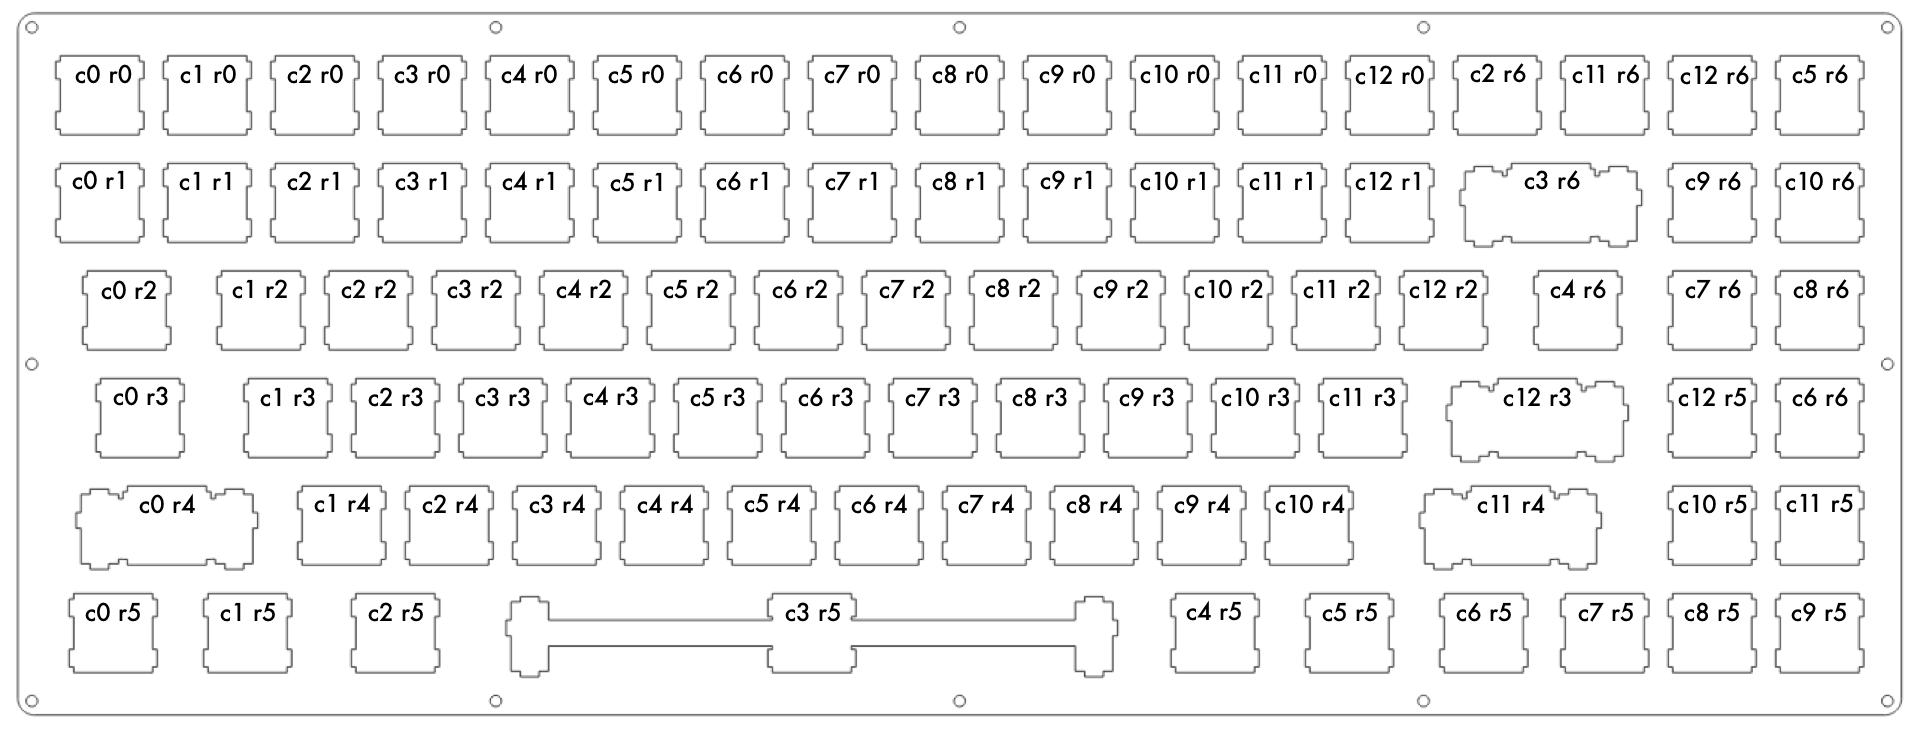 Keyboard_DZ_75+1_Matrix.png